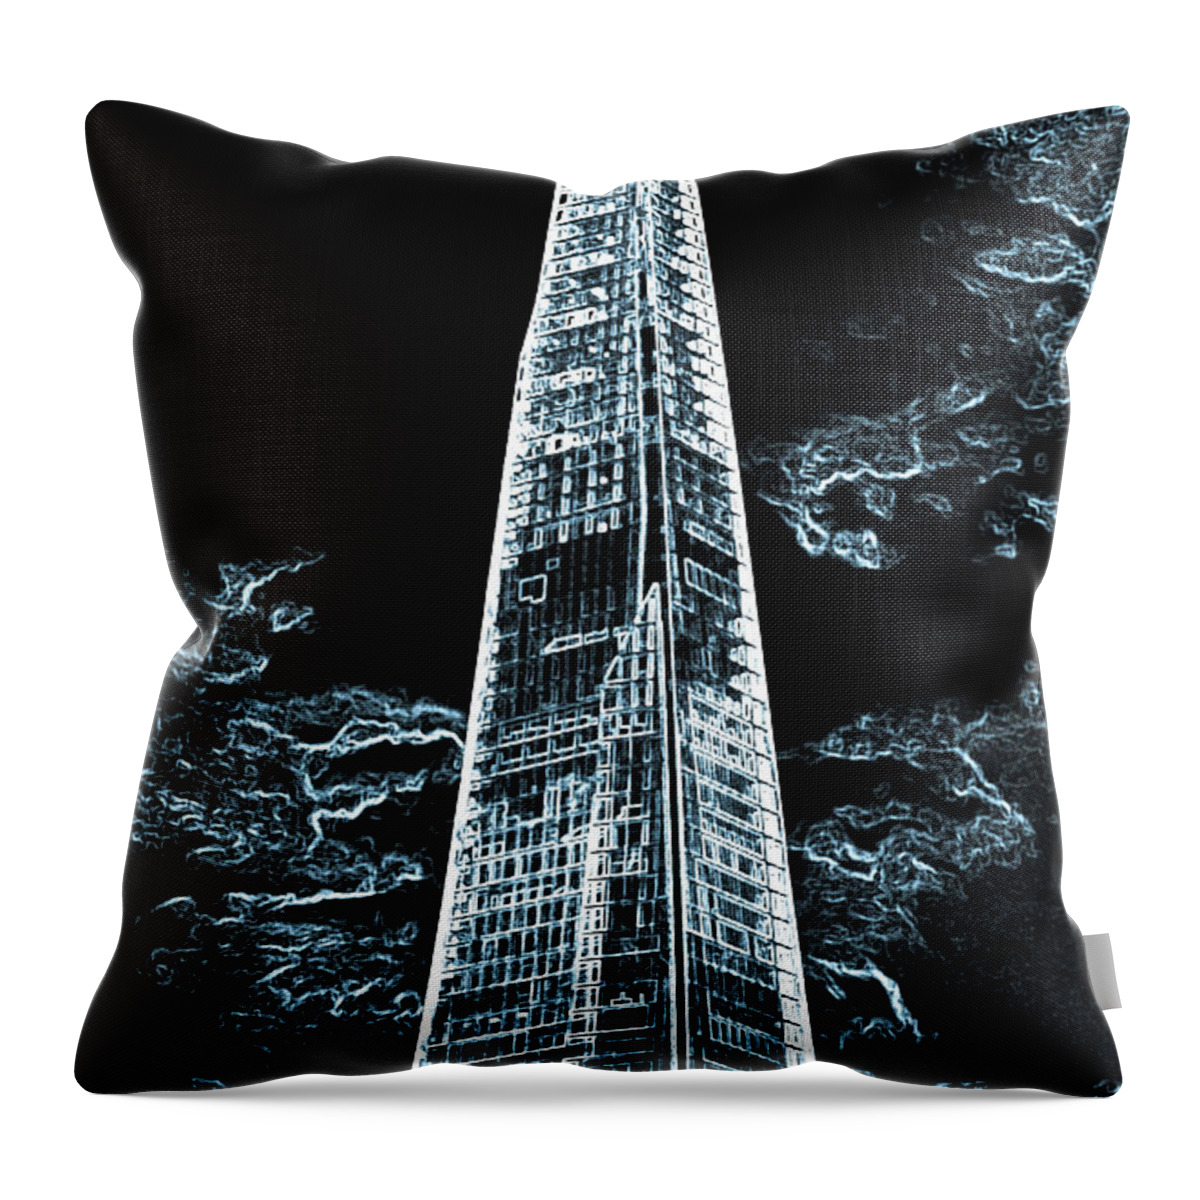 Shard Throw Pillow featuring the digital art The Shard London by David Pyatt